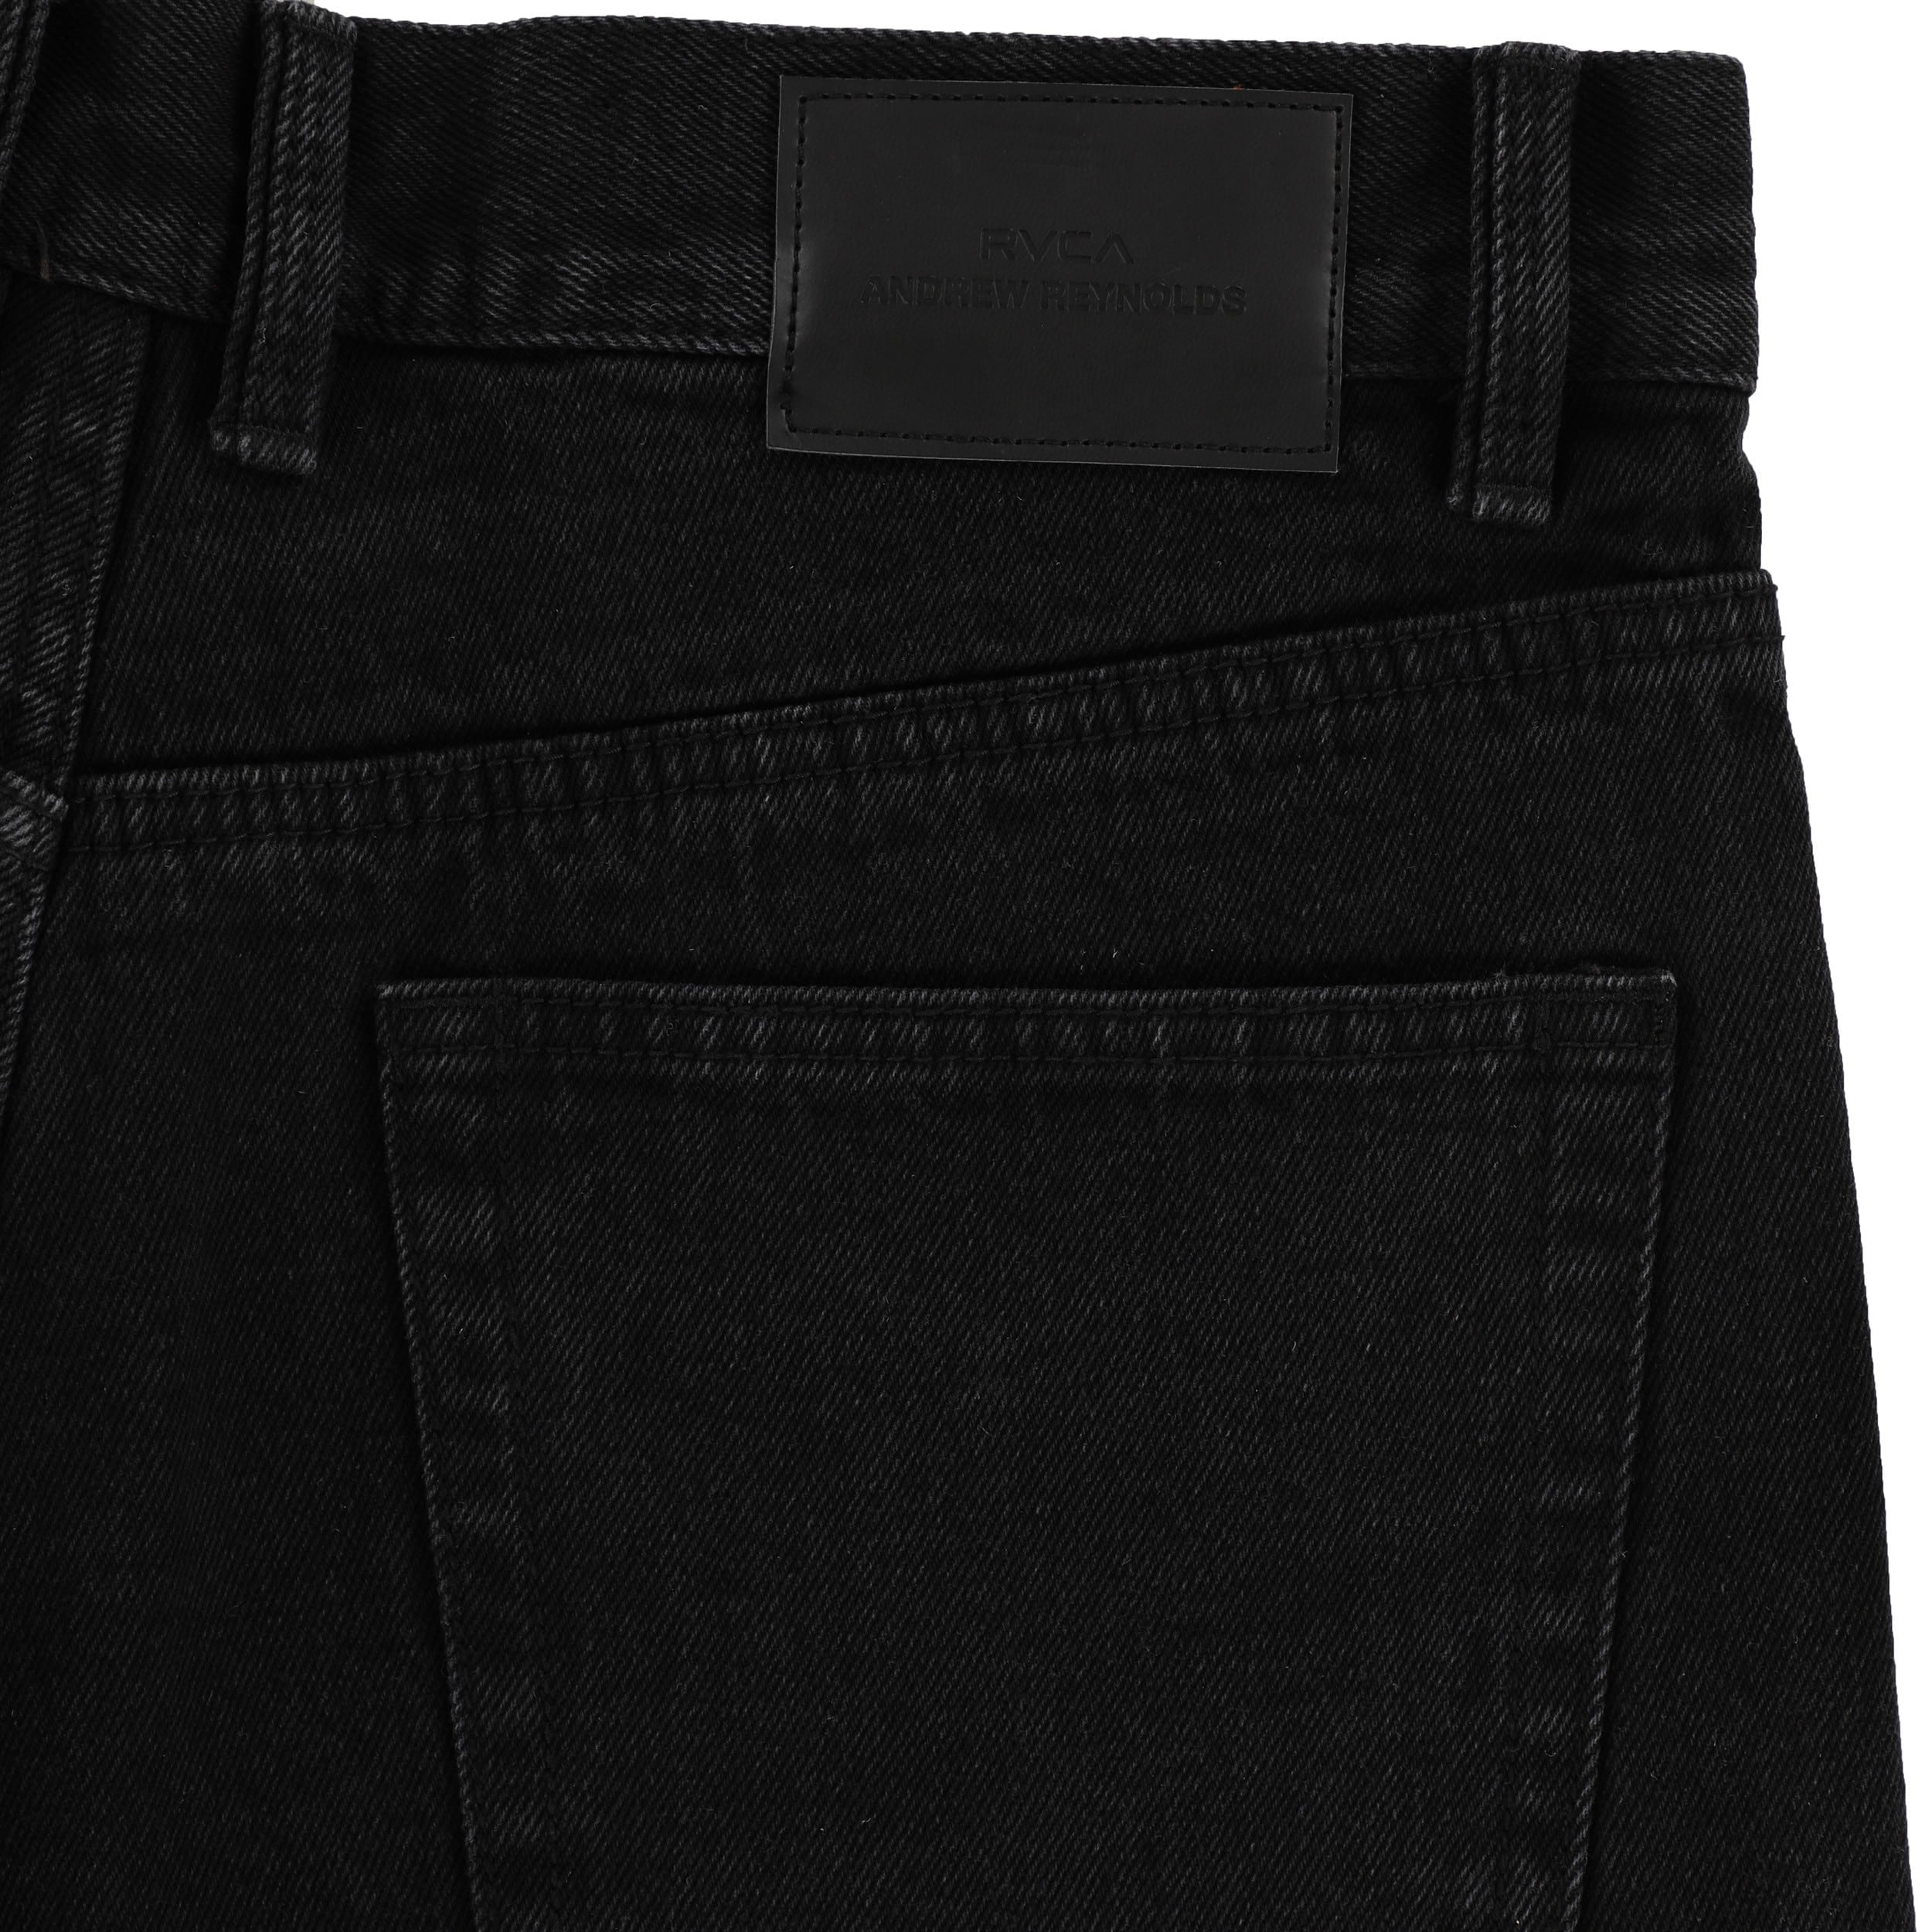 RVCA Reynolds Americana Denim Jeans - black rinse | Tactics